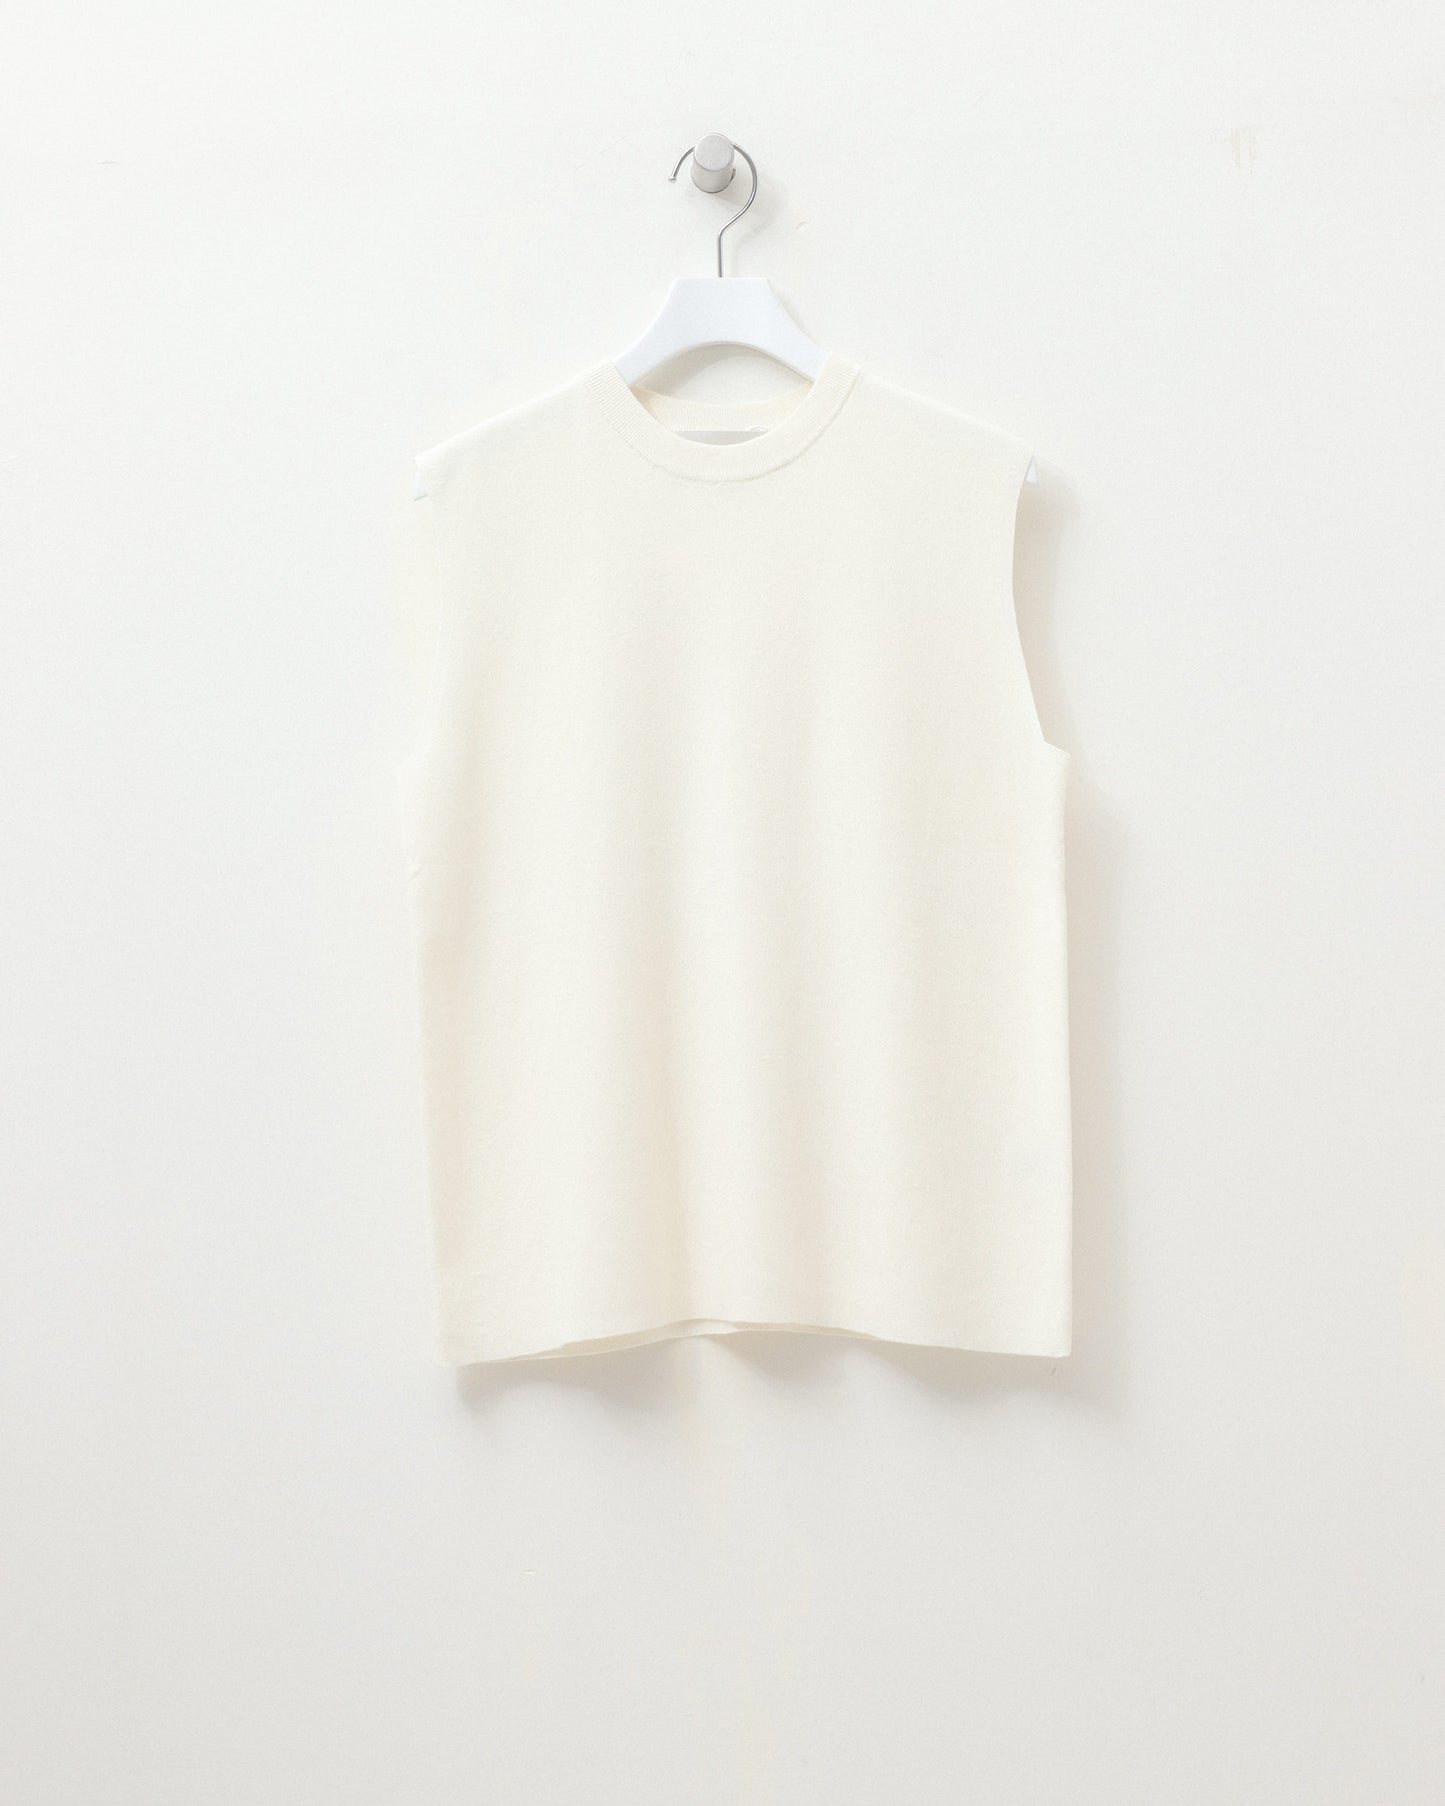 seacell & organic cotton sleeveless top